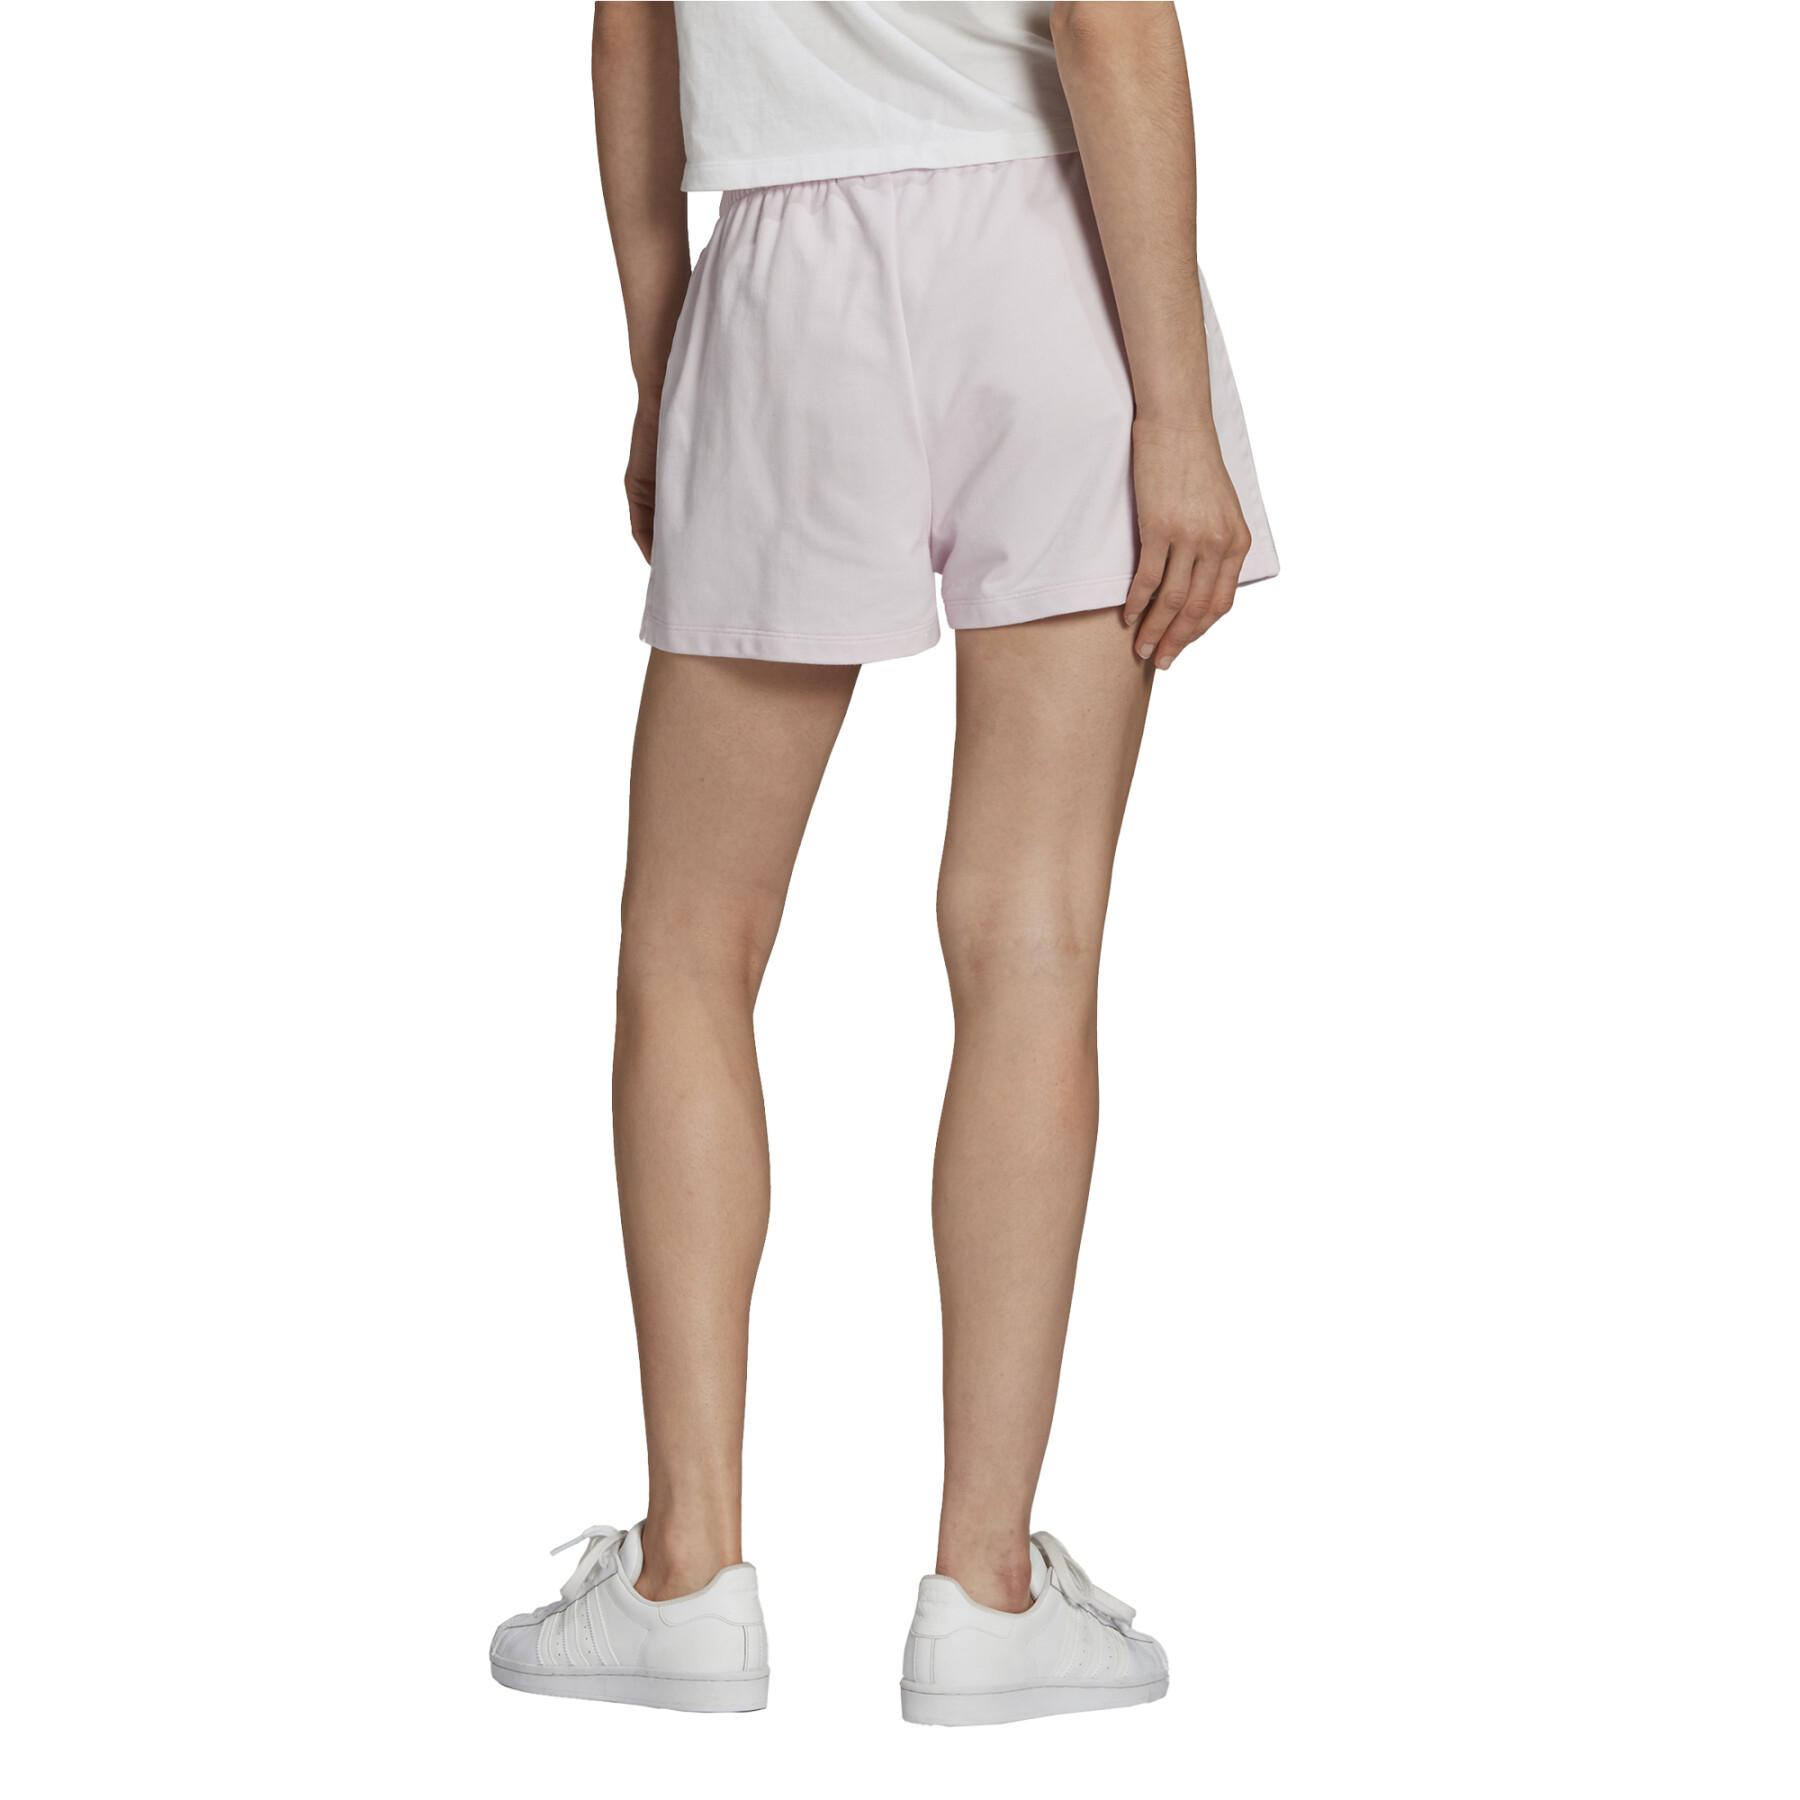 Women's shorts adidas Originals Tennis Luxe 3-Stripes